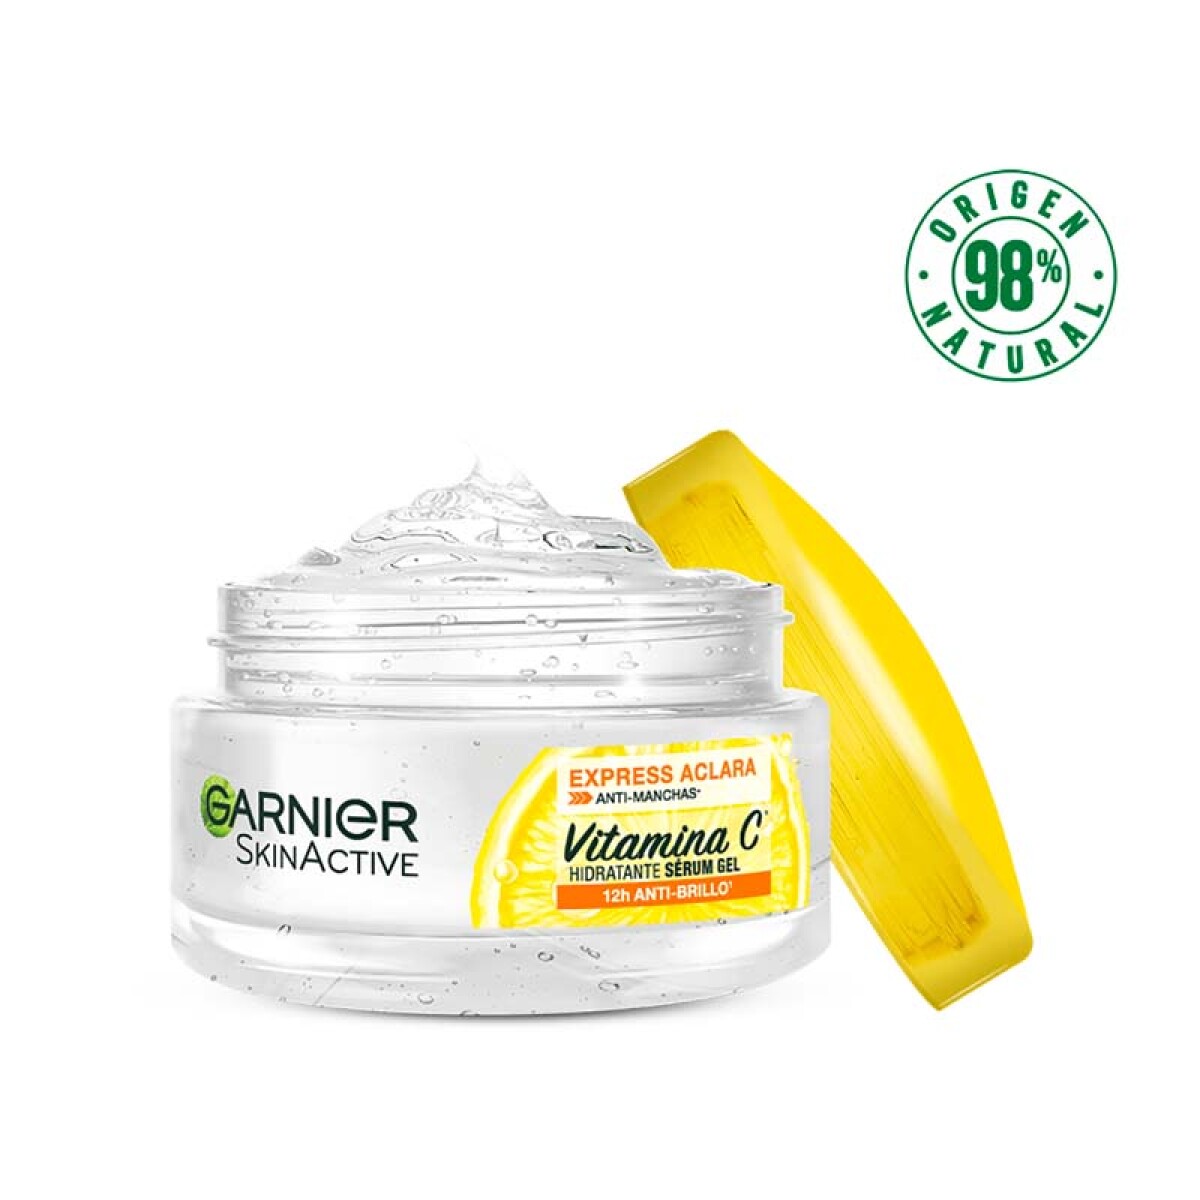 Crema Gel Garnier Express Aclara Hidratante Vitamina C - 50 ml 